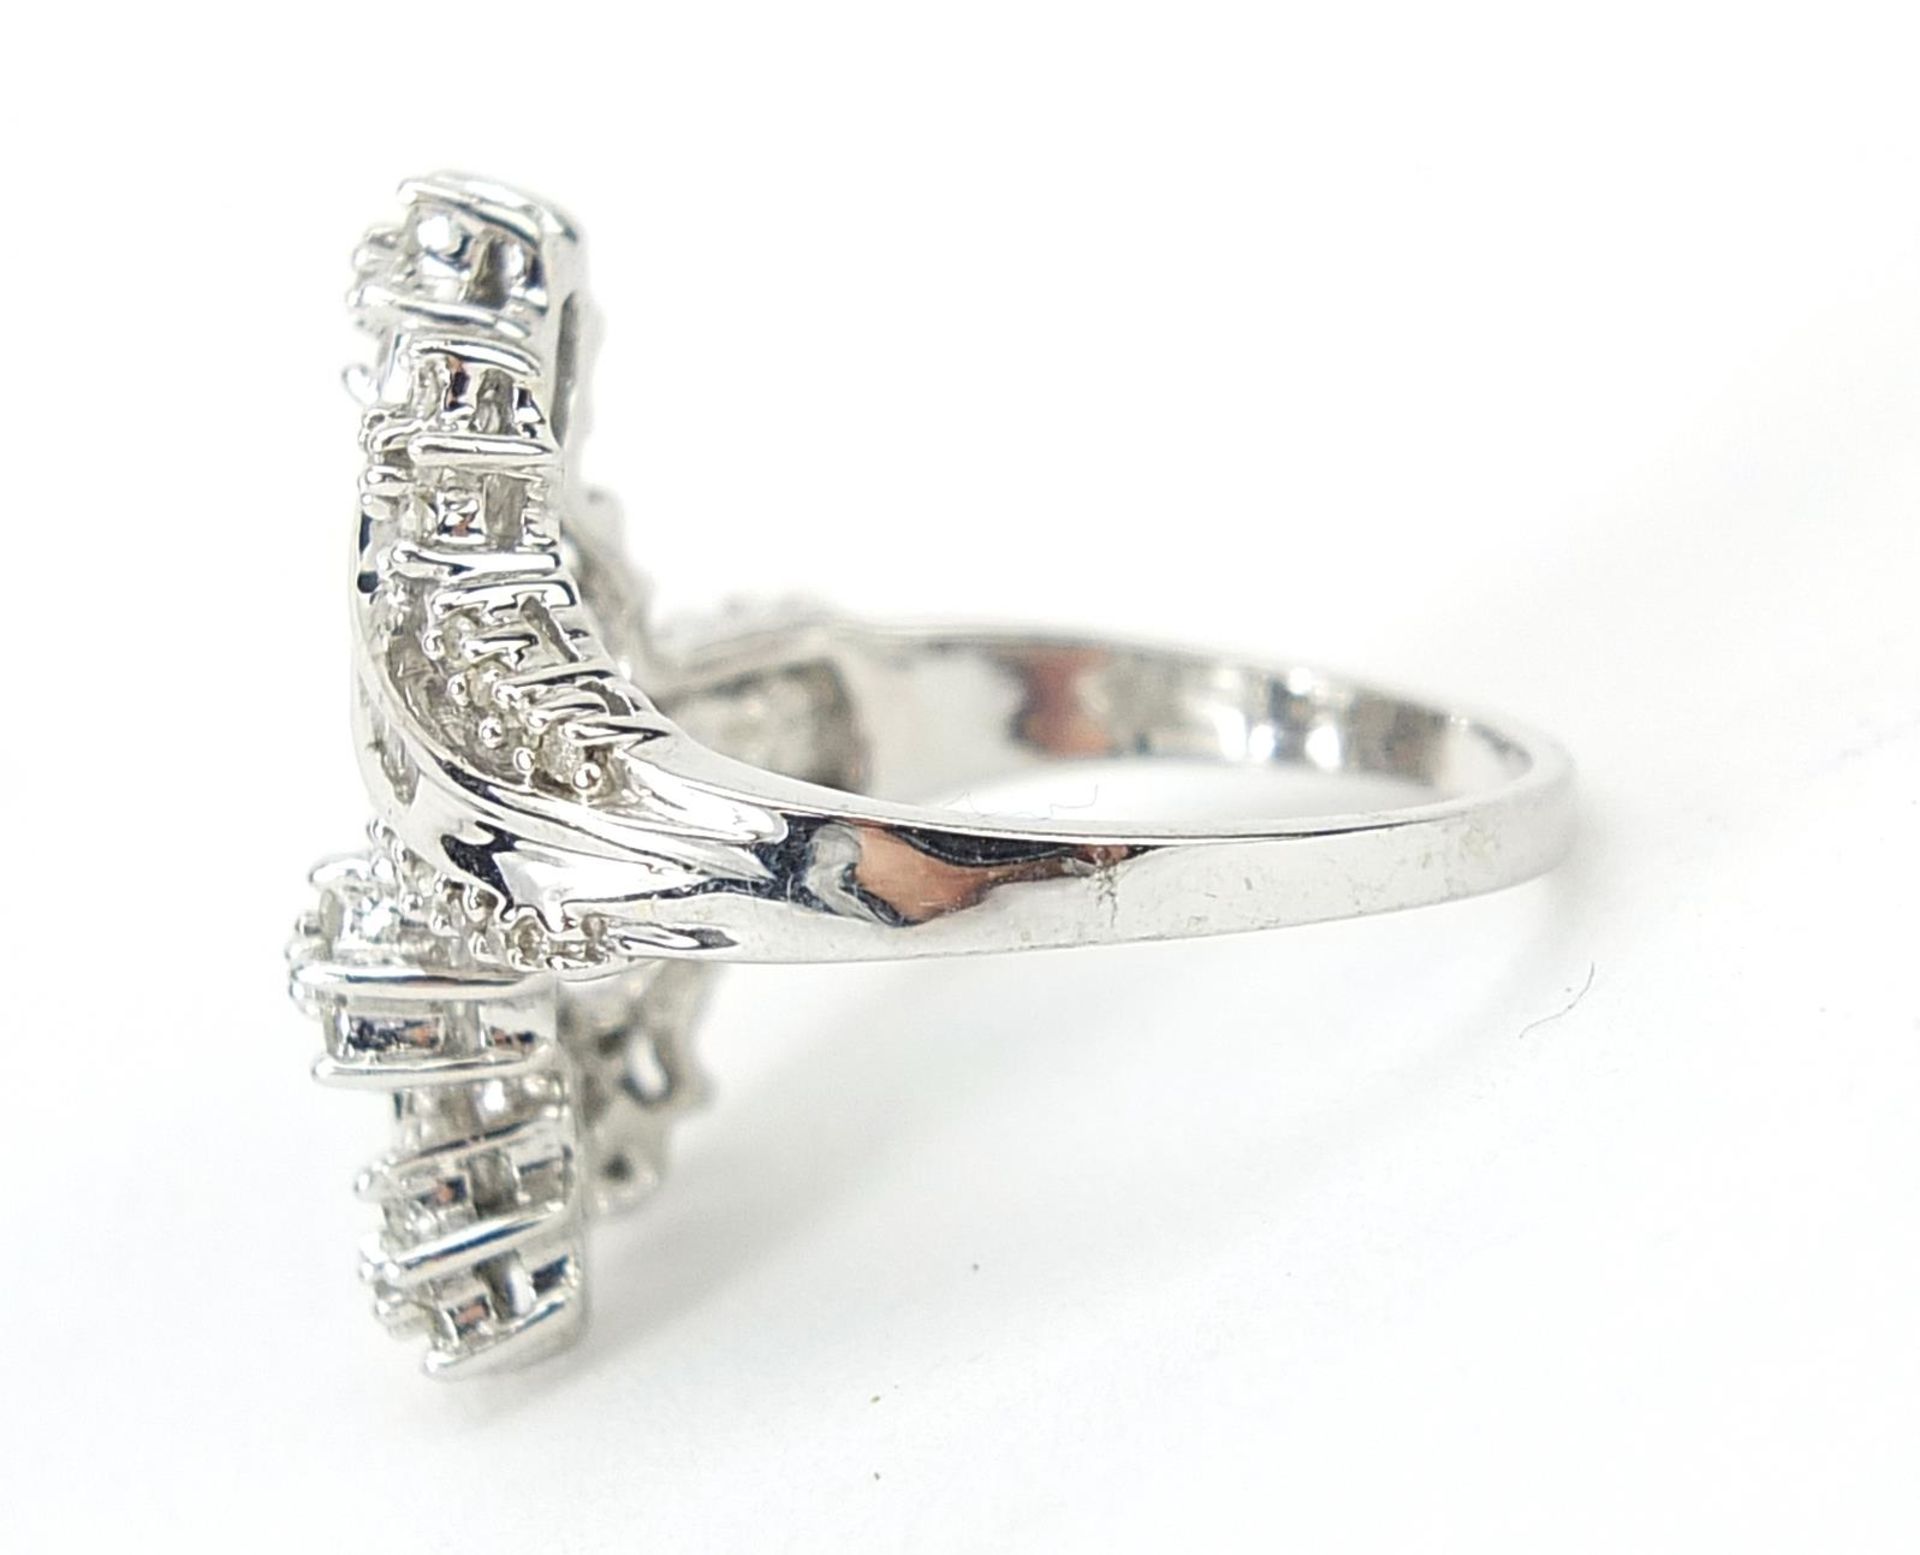 9ct white gold diamond shooting star design ring, size O, 5.0g - Image 2 of 4